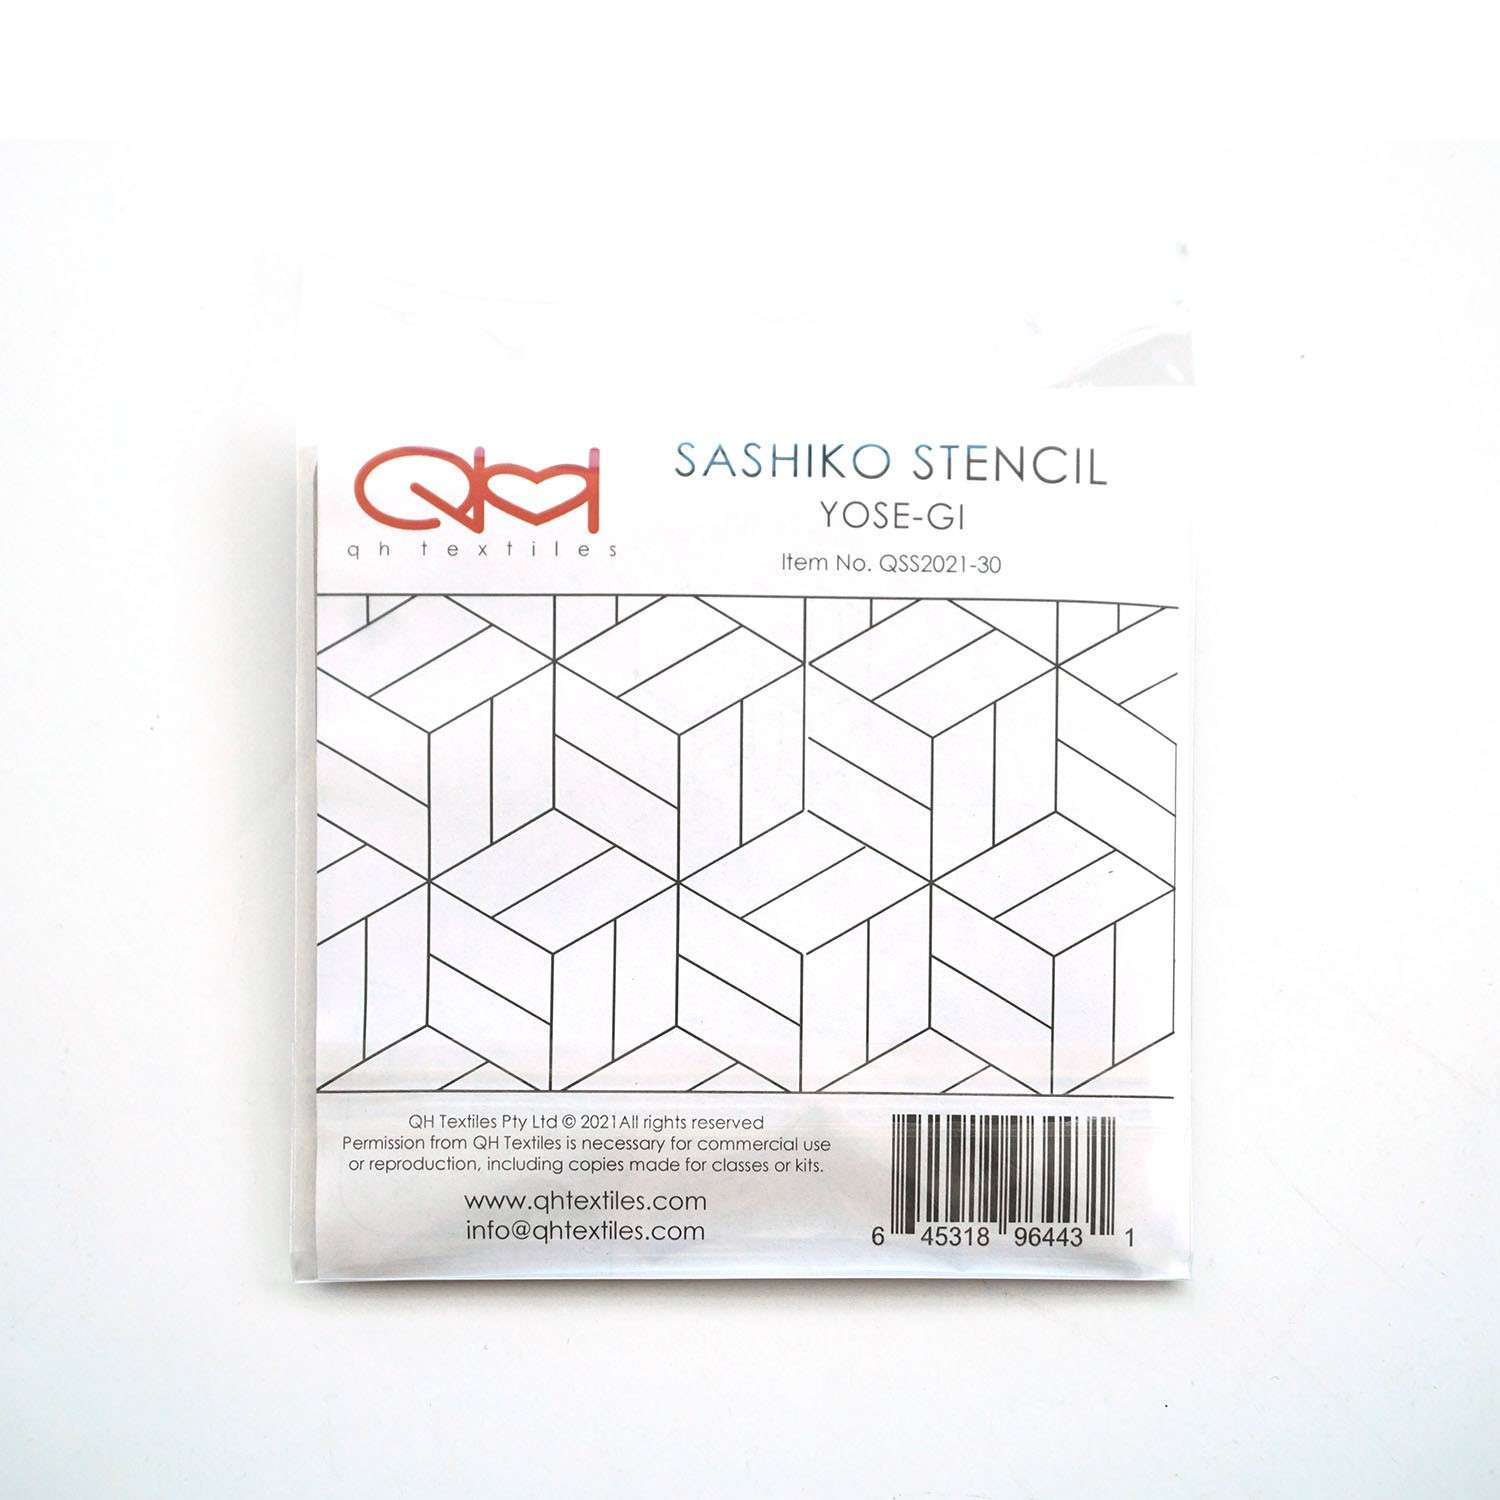 How to: Sashiko Stencil Marking 